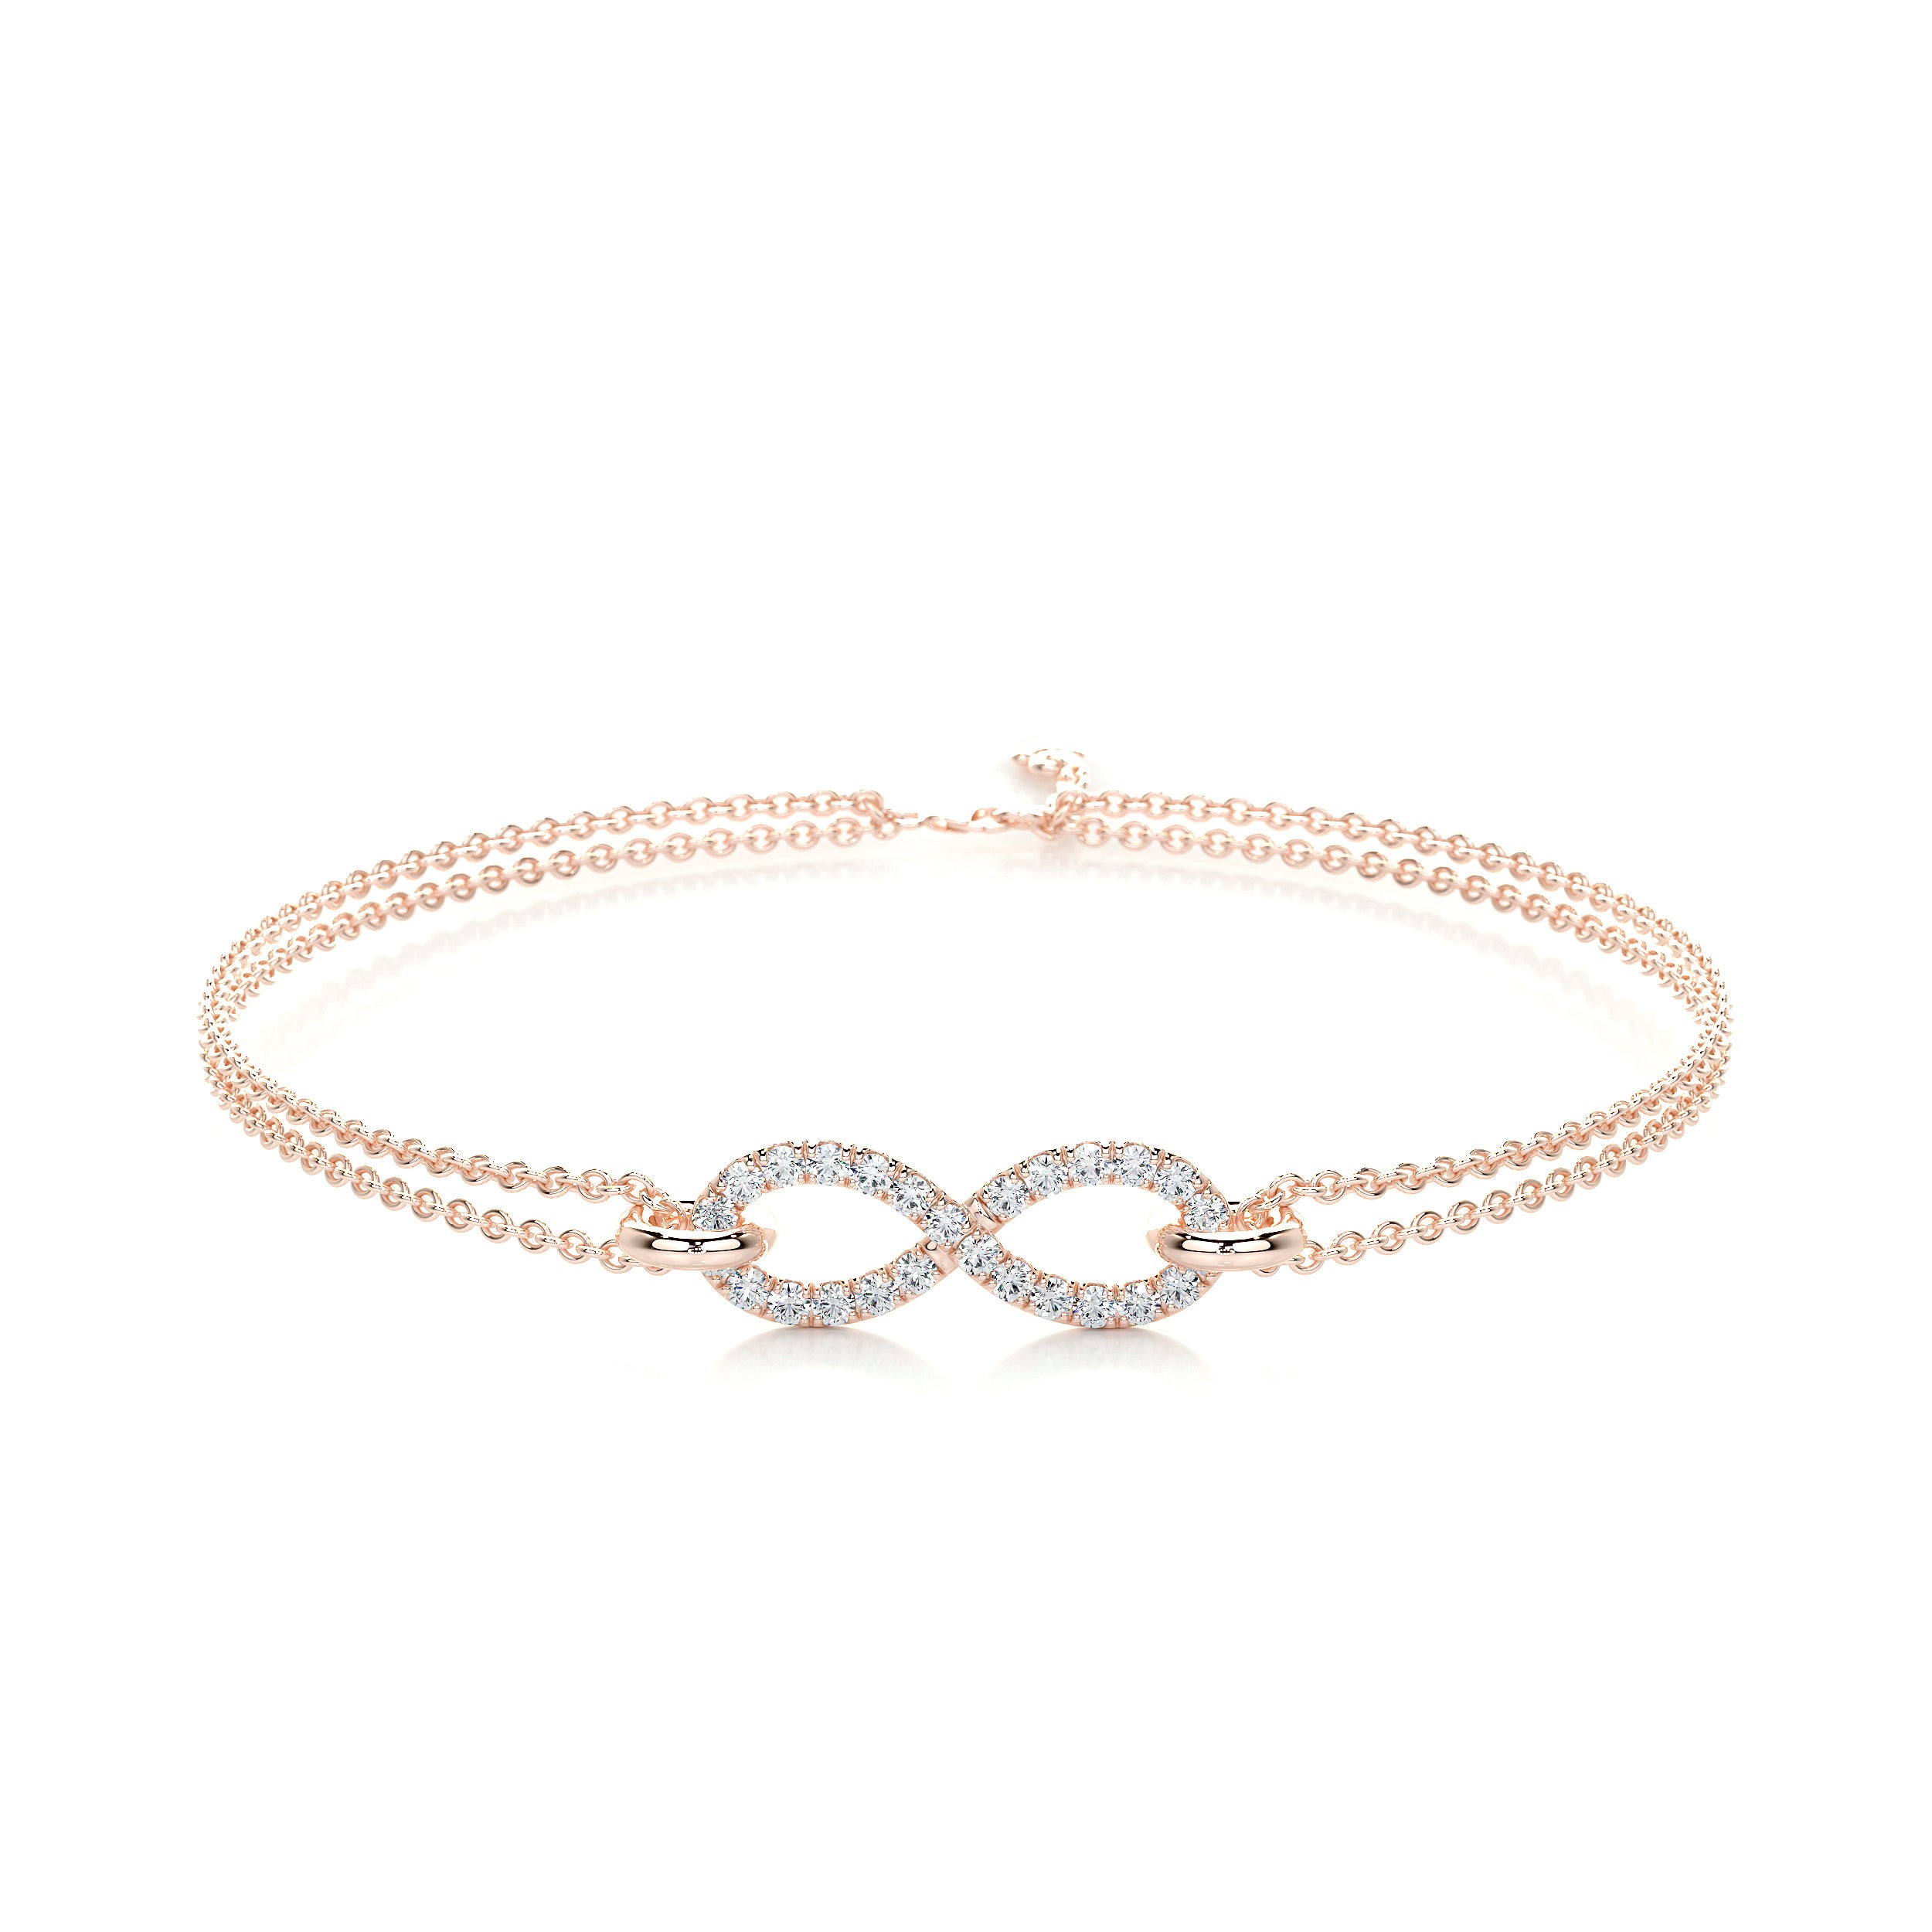 Debbie Diamonds Bracelet   (0.25 Carat) -14K Rose Gold